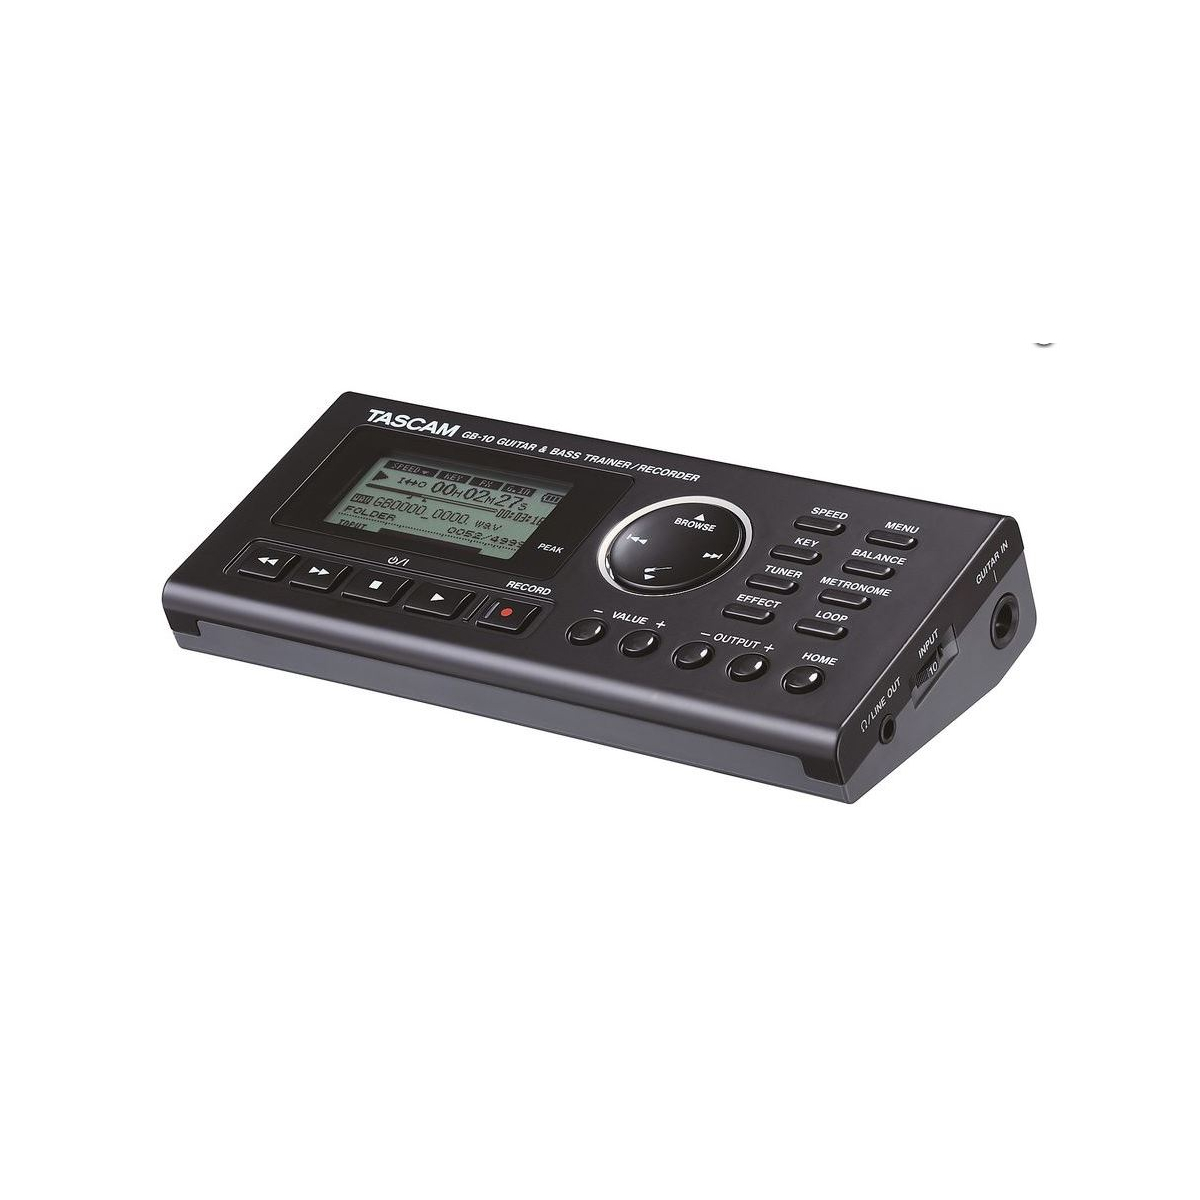 Enregistreurs portables - Tascam - GB-10